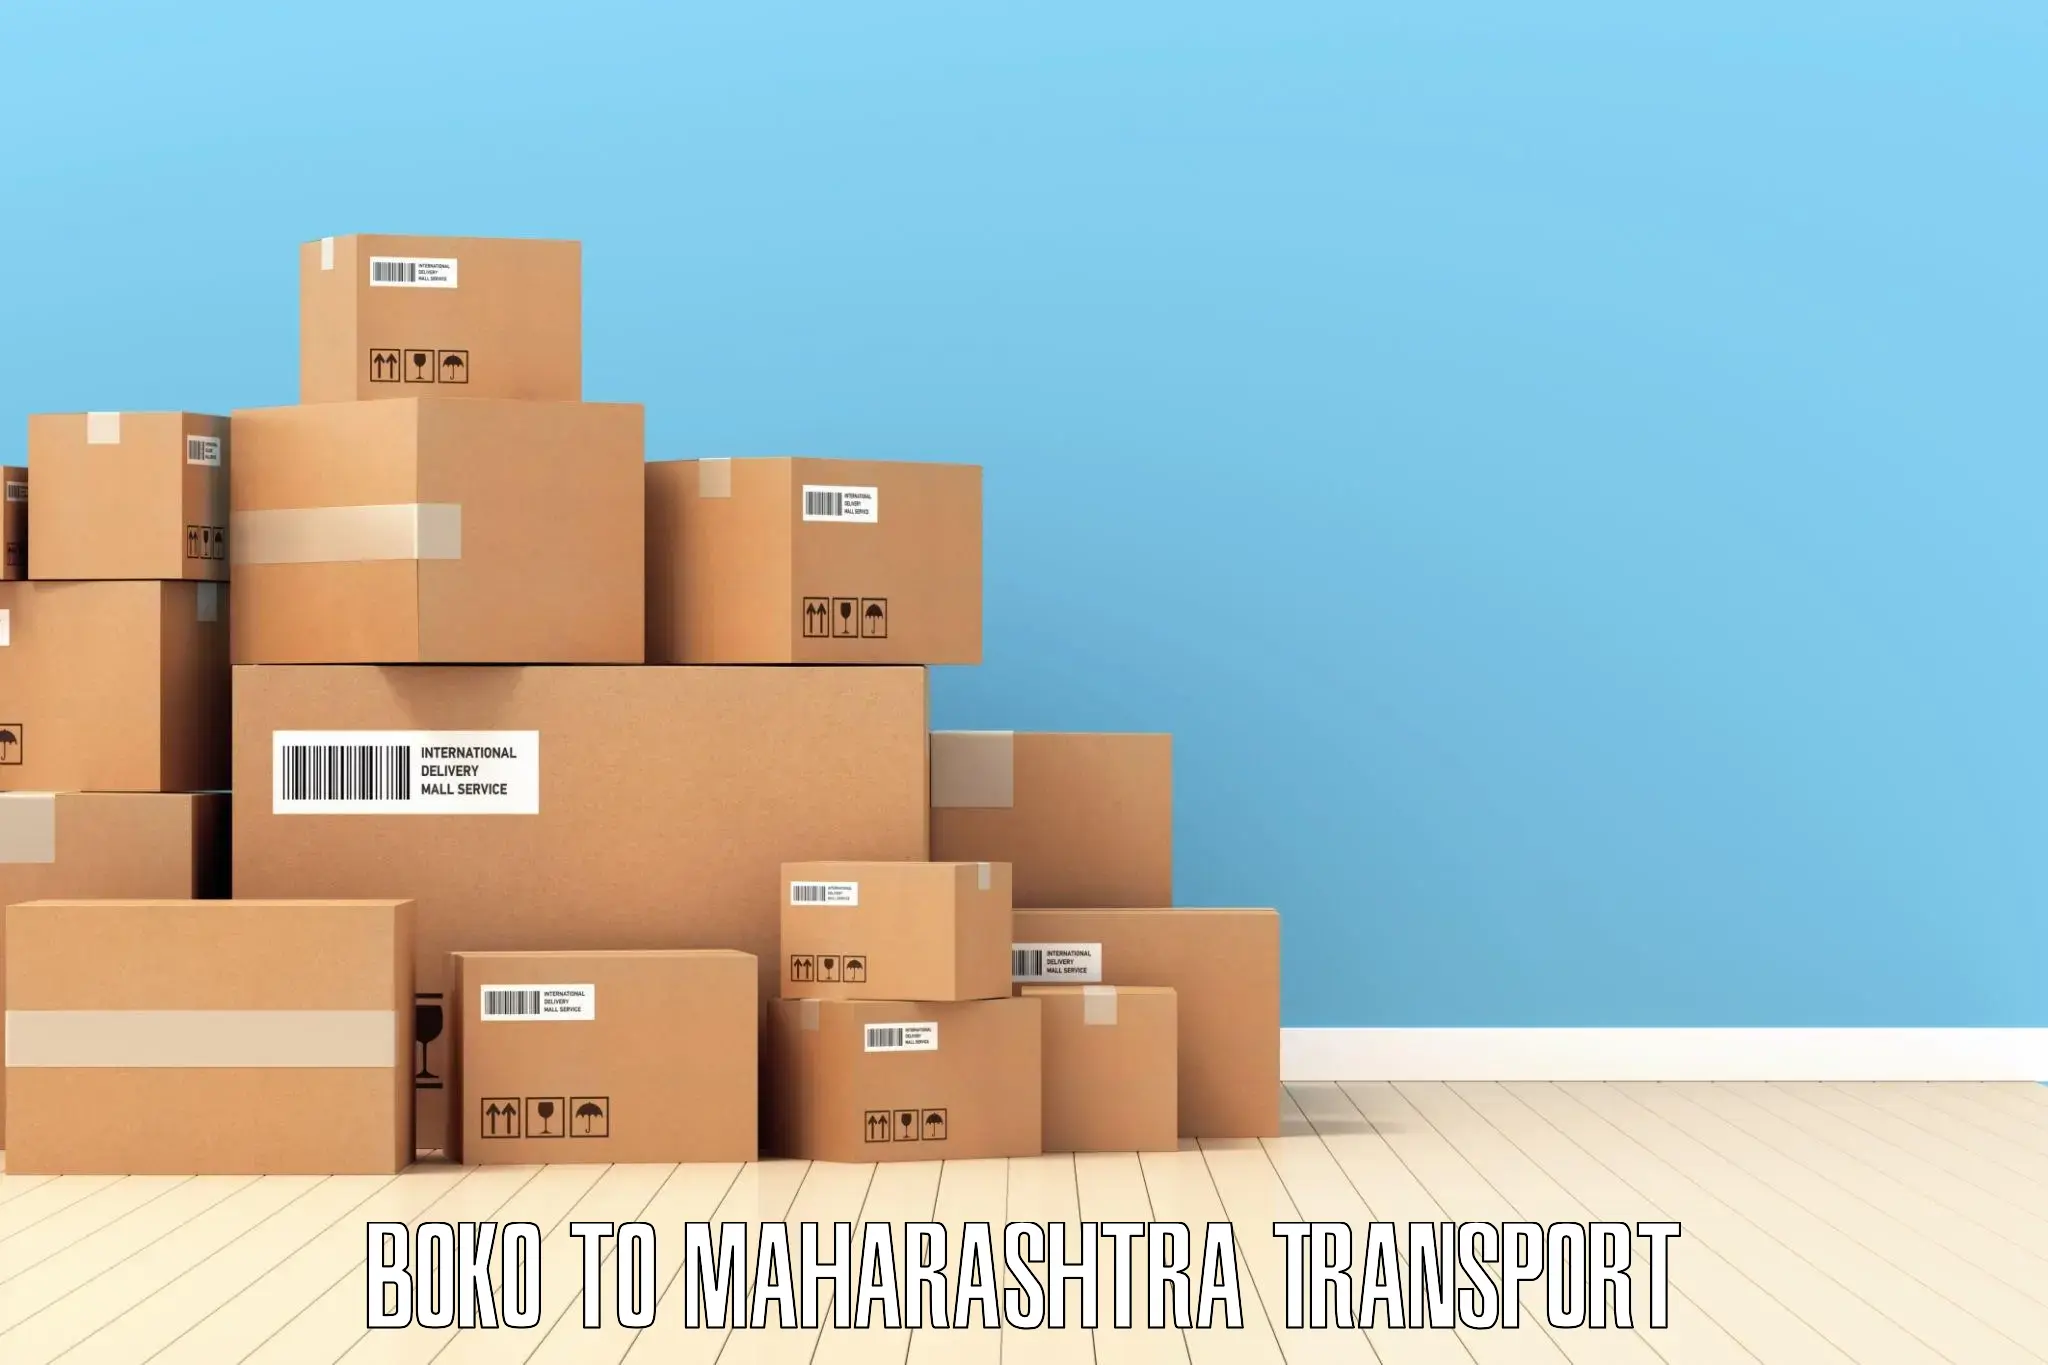 Truck transport companies in India Boko to Dongarkinhi